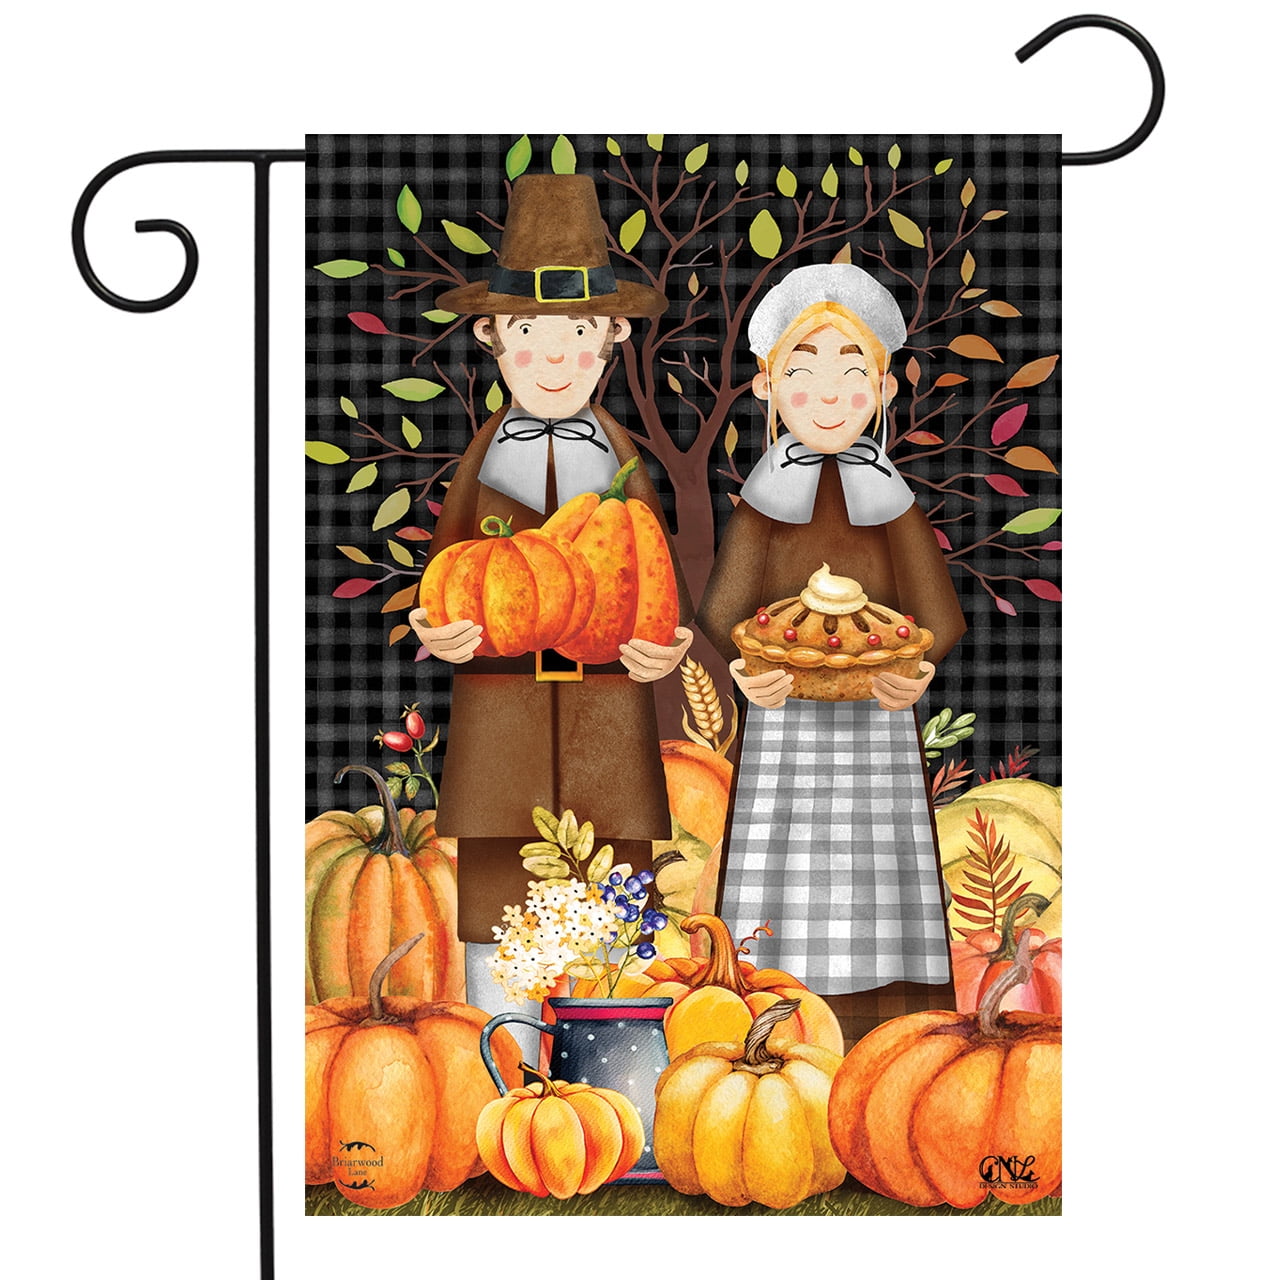 Pilgrims Thanksgiving Garden Flag Pumpkins Pie 12.5